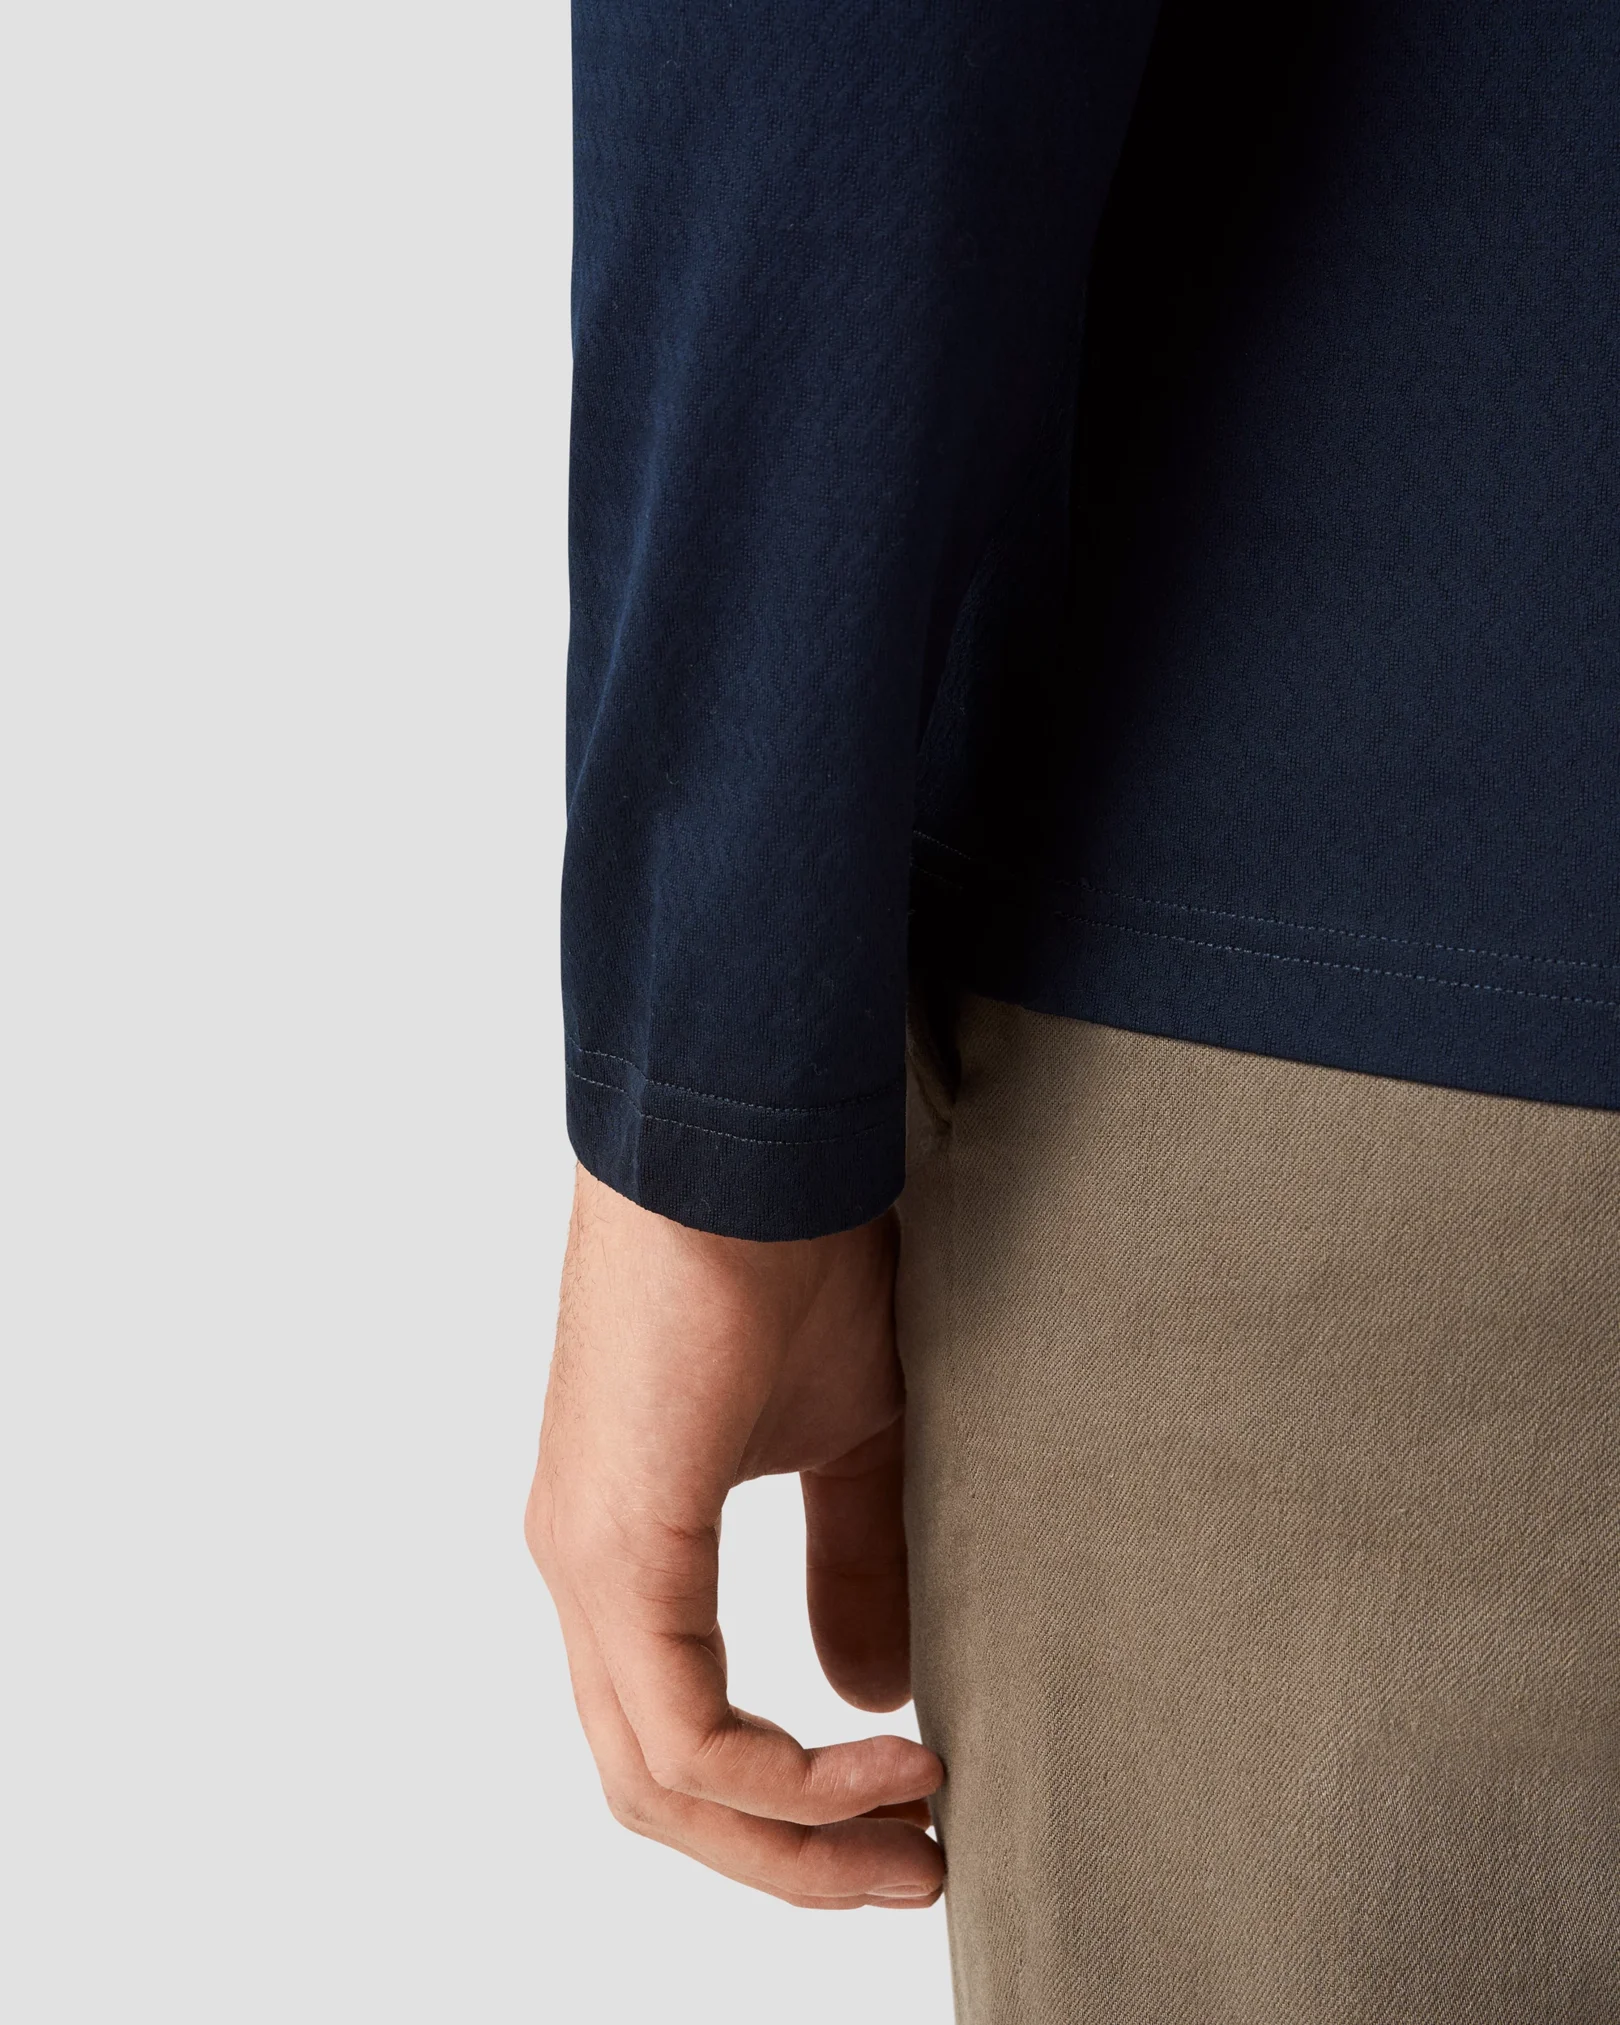 Eton - navy blue open collar long sleeve regular fit